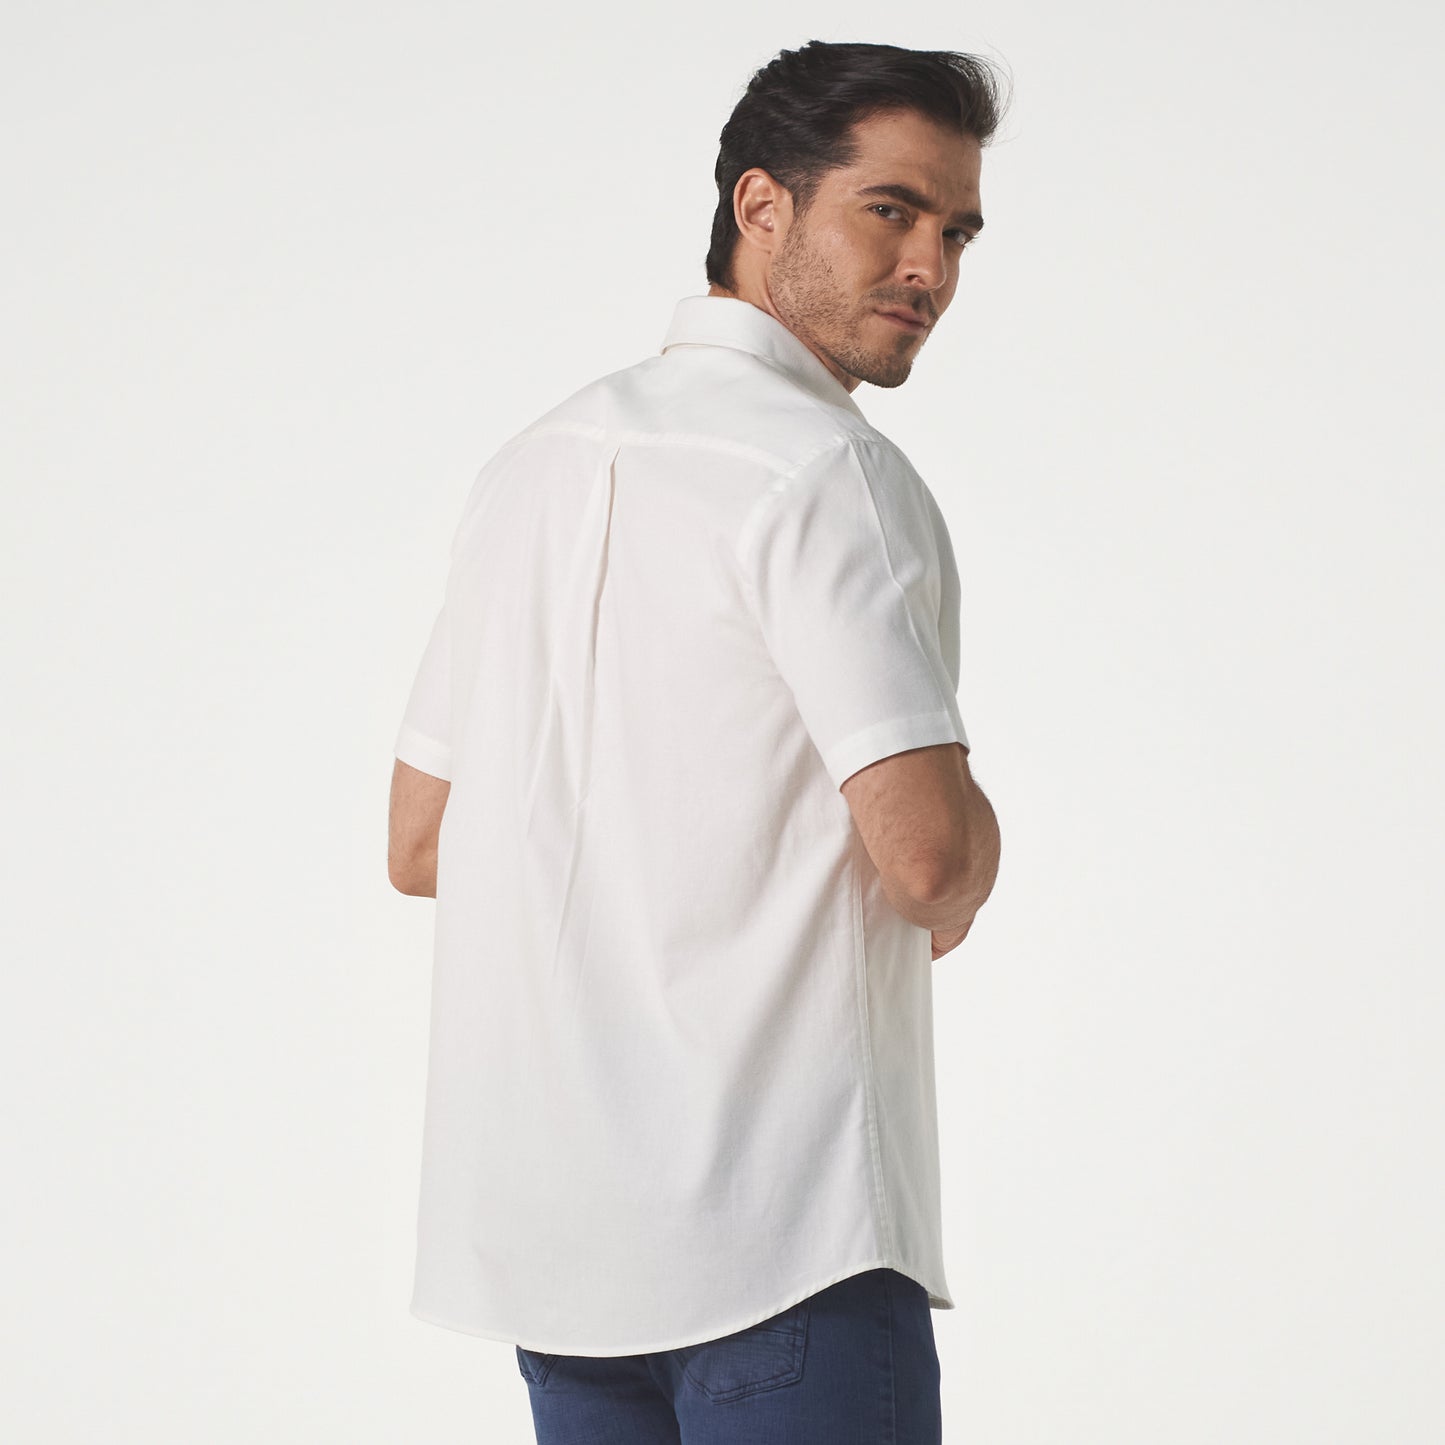 Camisa manga corta color blanco